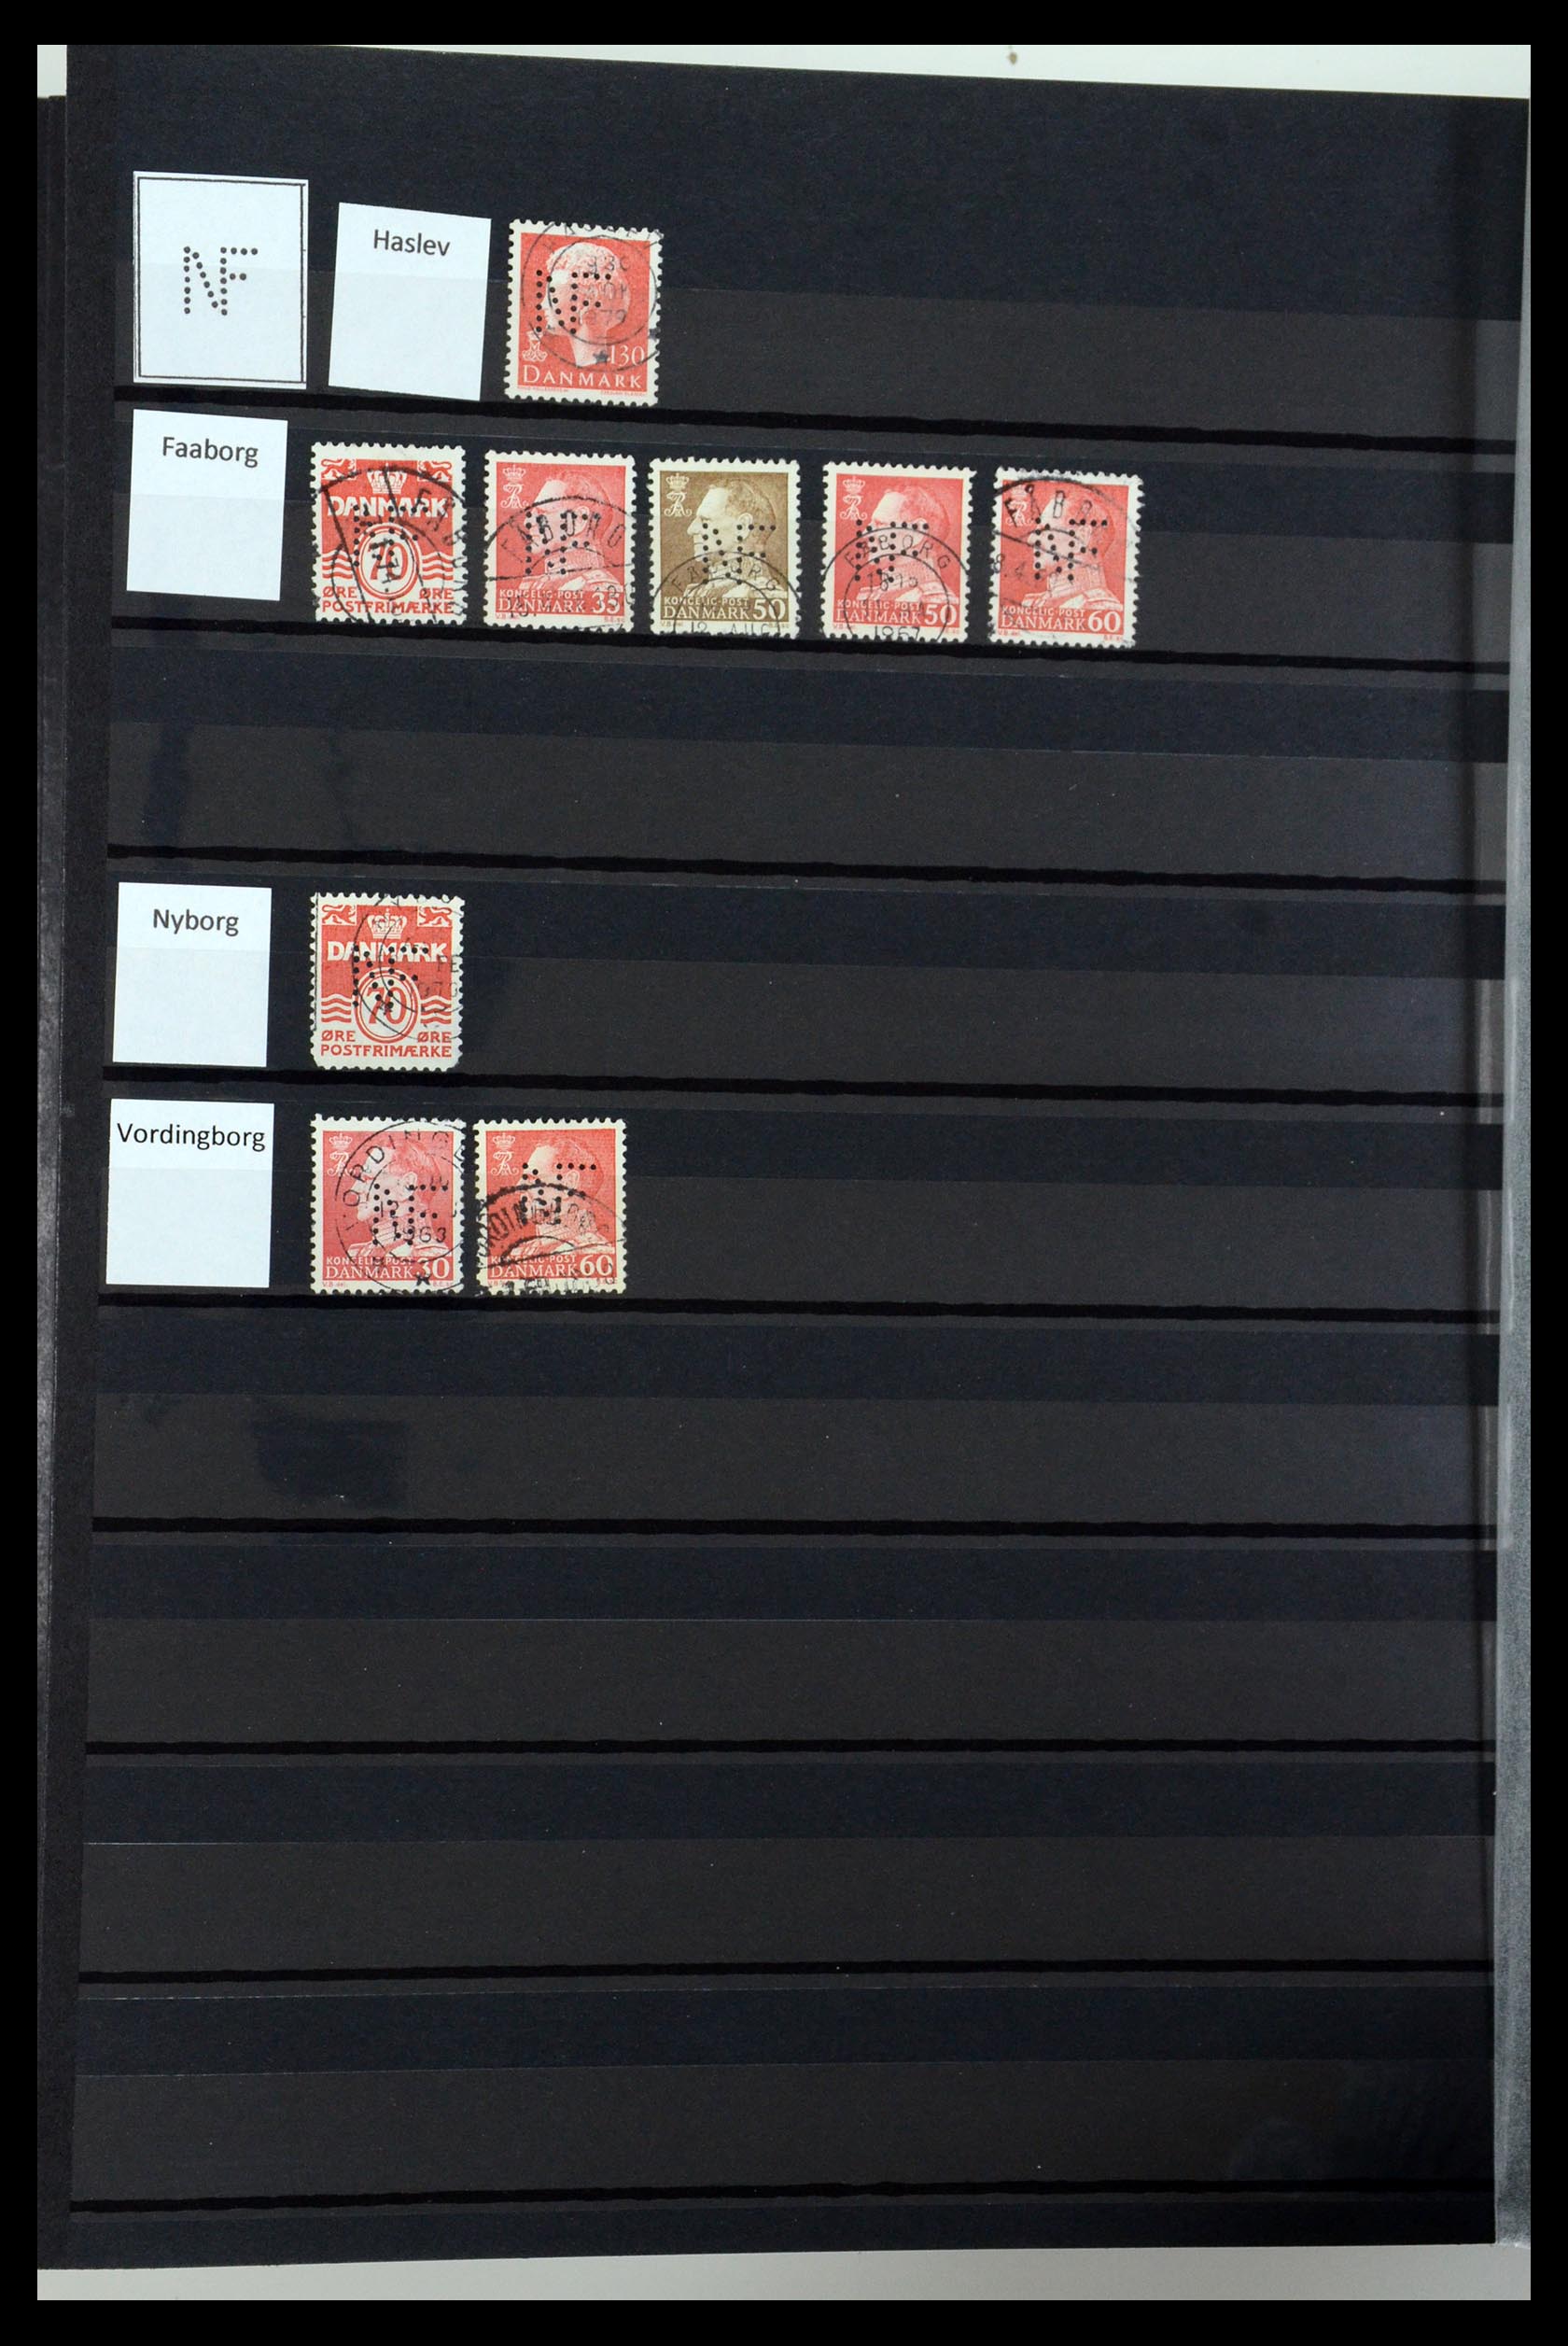 36396 097 - Stamp collection 36396 Denmark perfins.